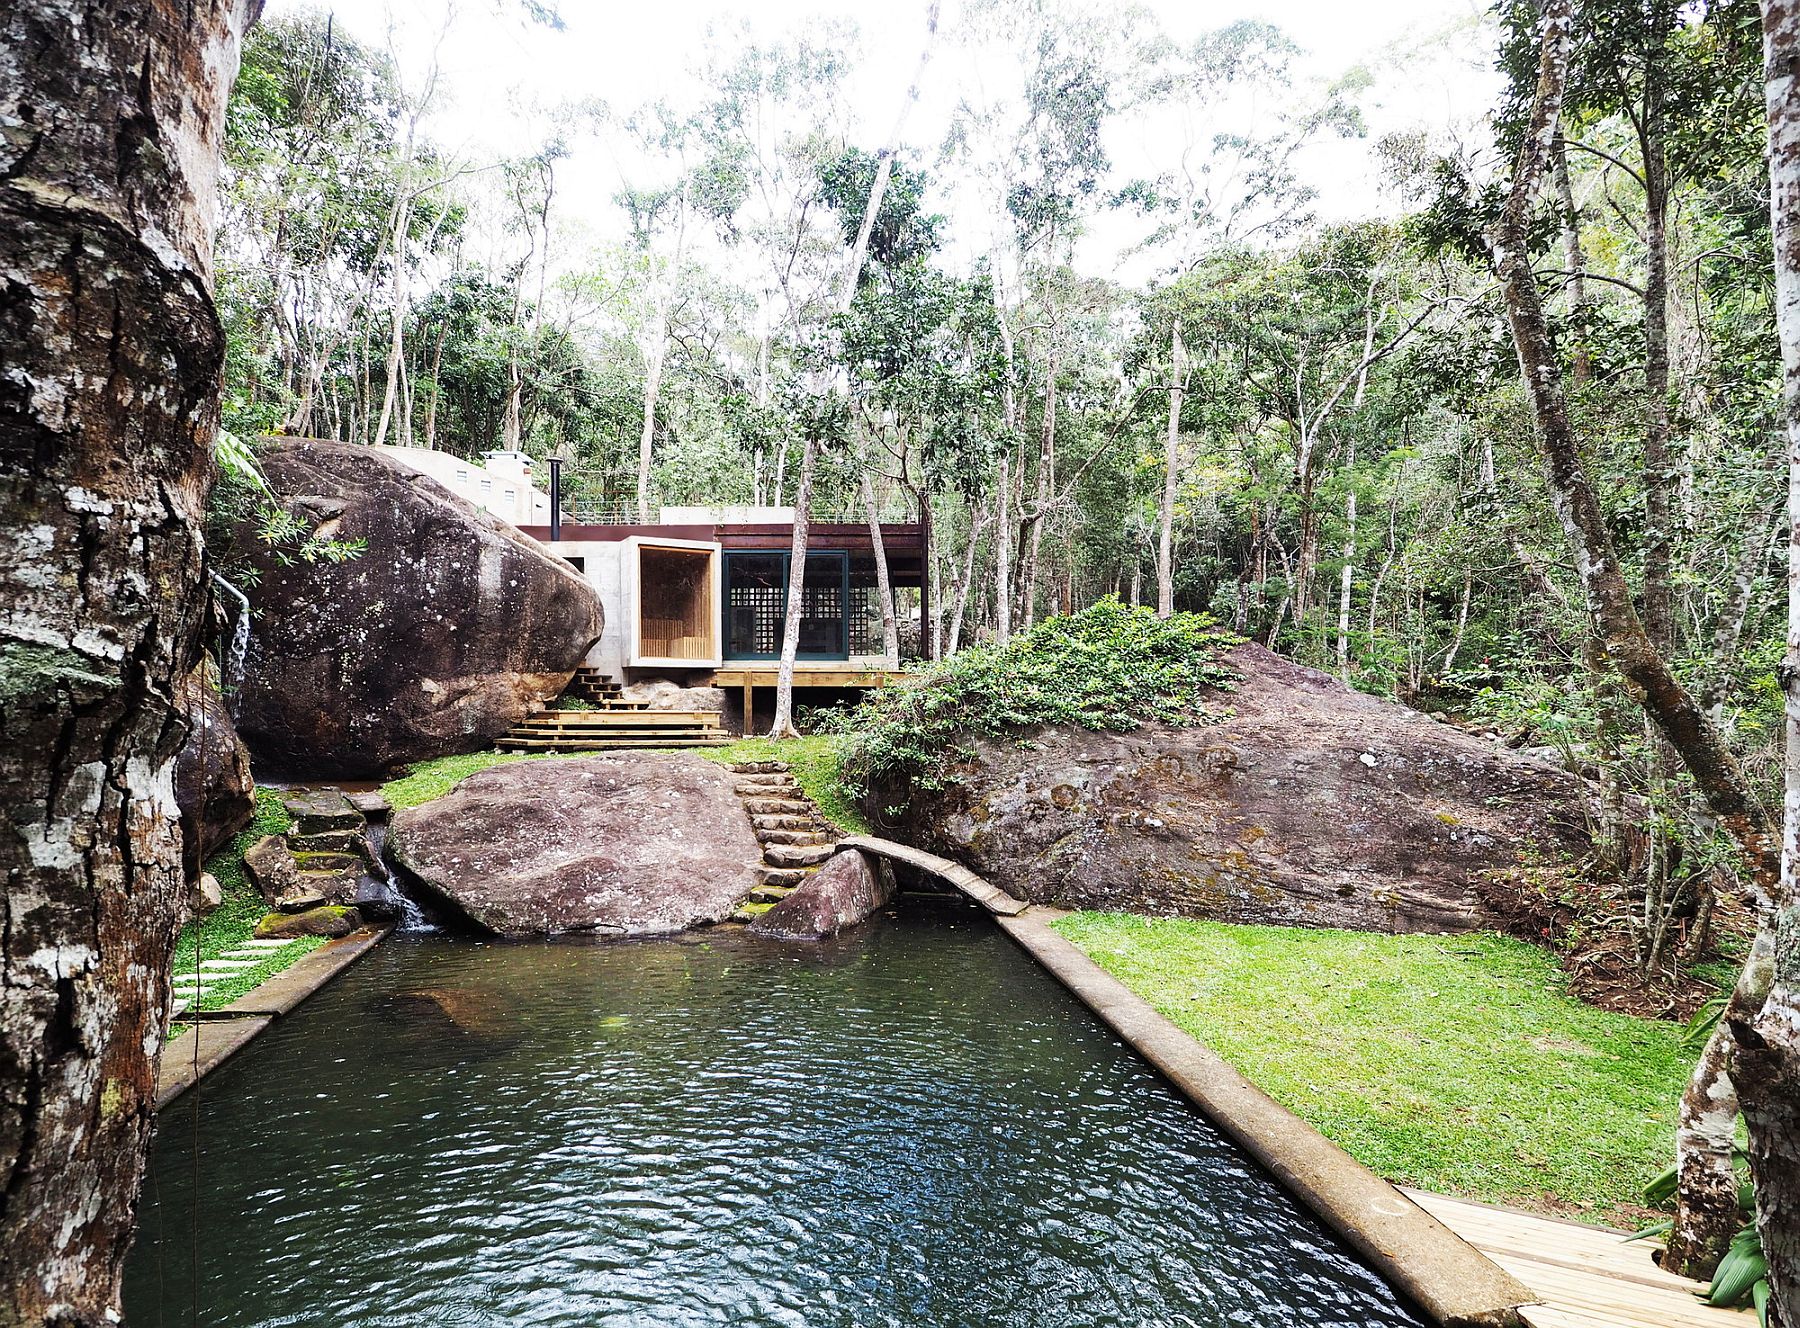 Natural Swimming Pool Set in a Green Landscape Gets a Multi-Tasking Pavilion